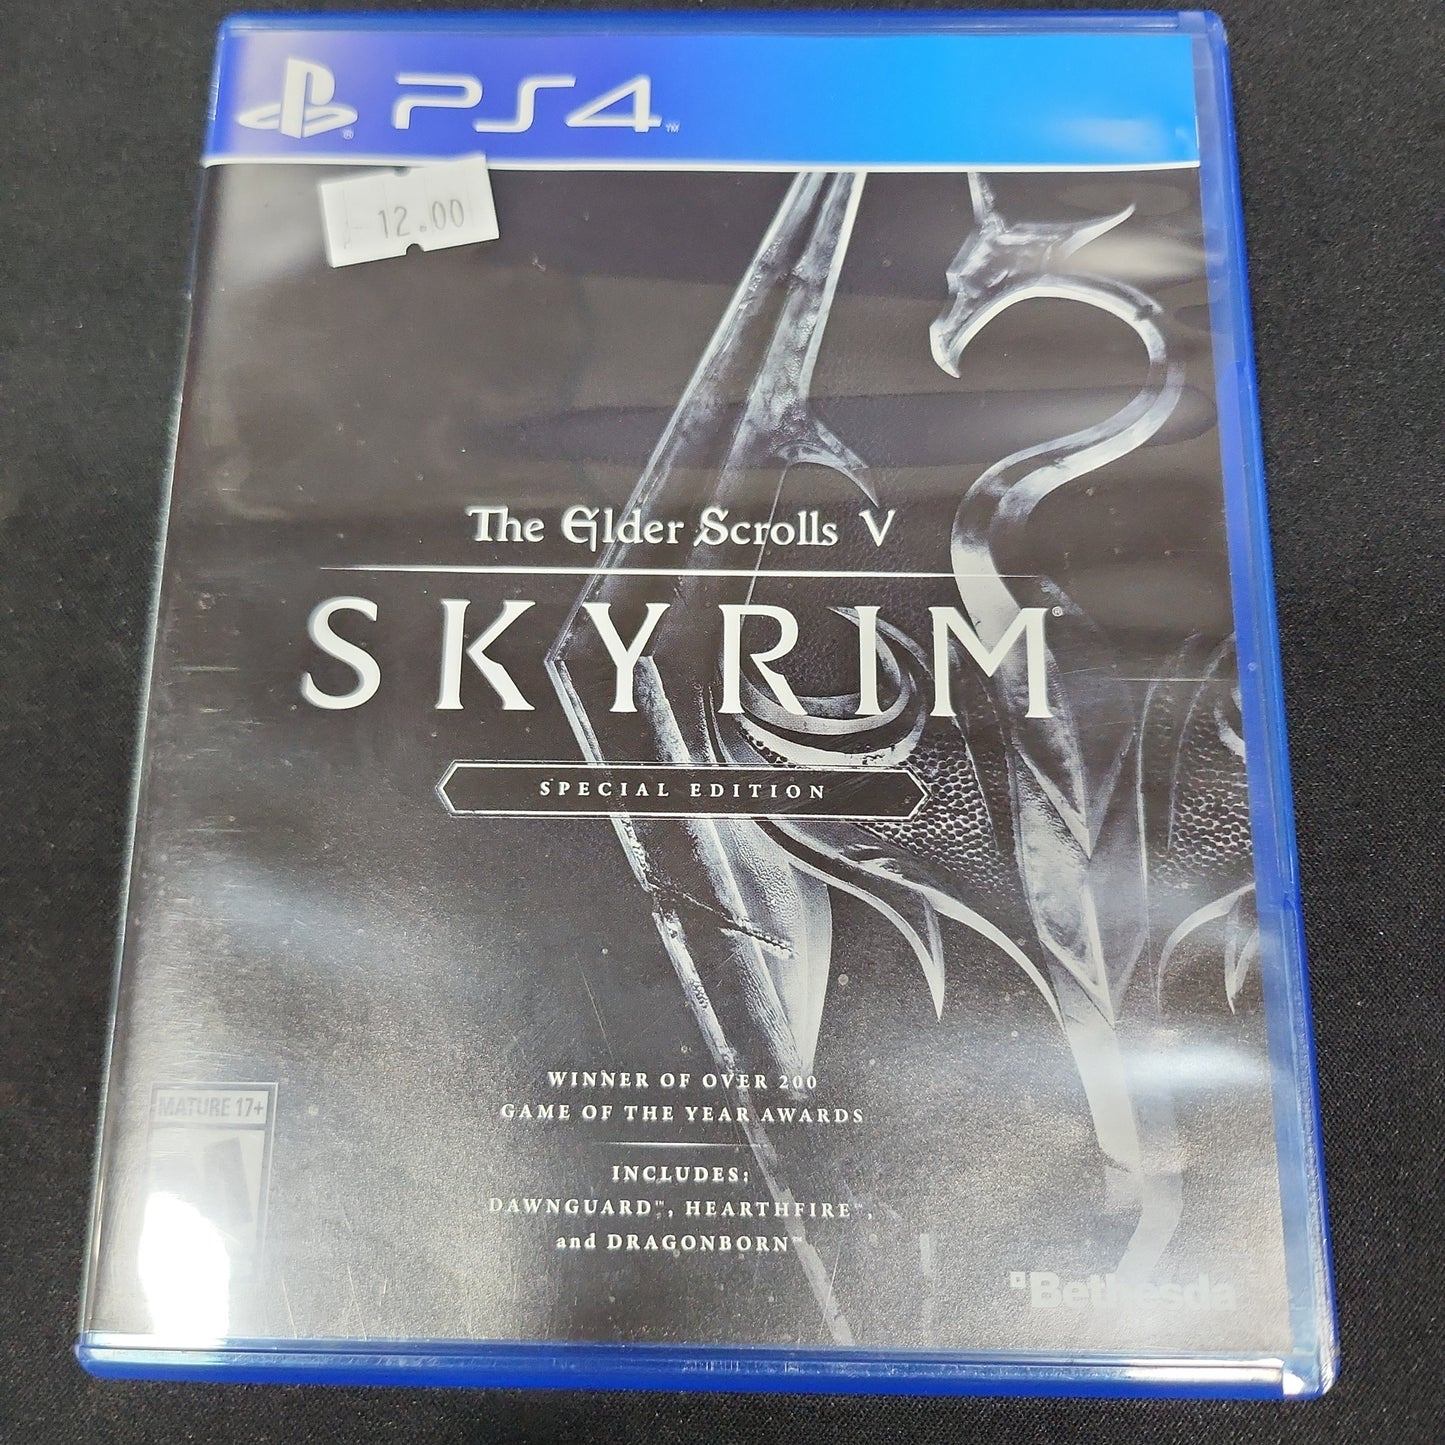 The elder scrolls V skyrim special edition